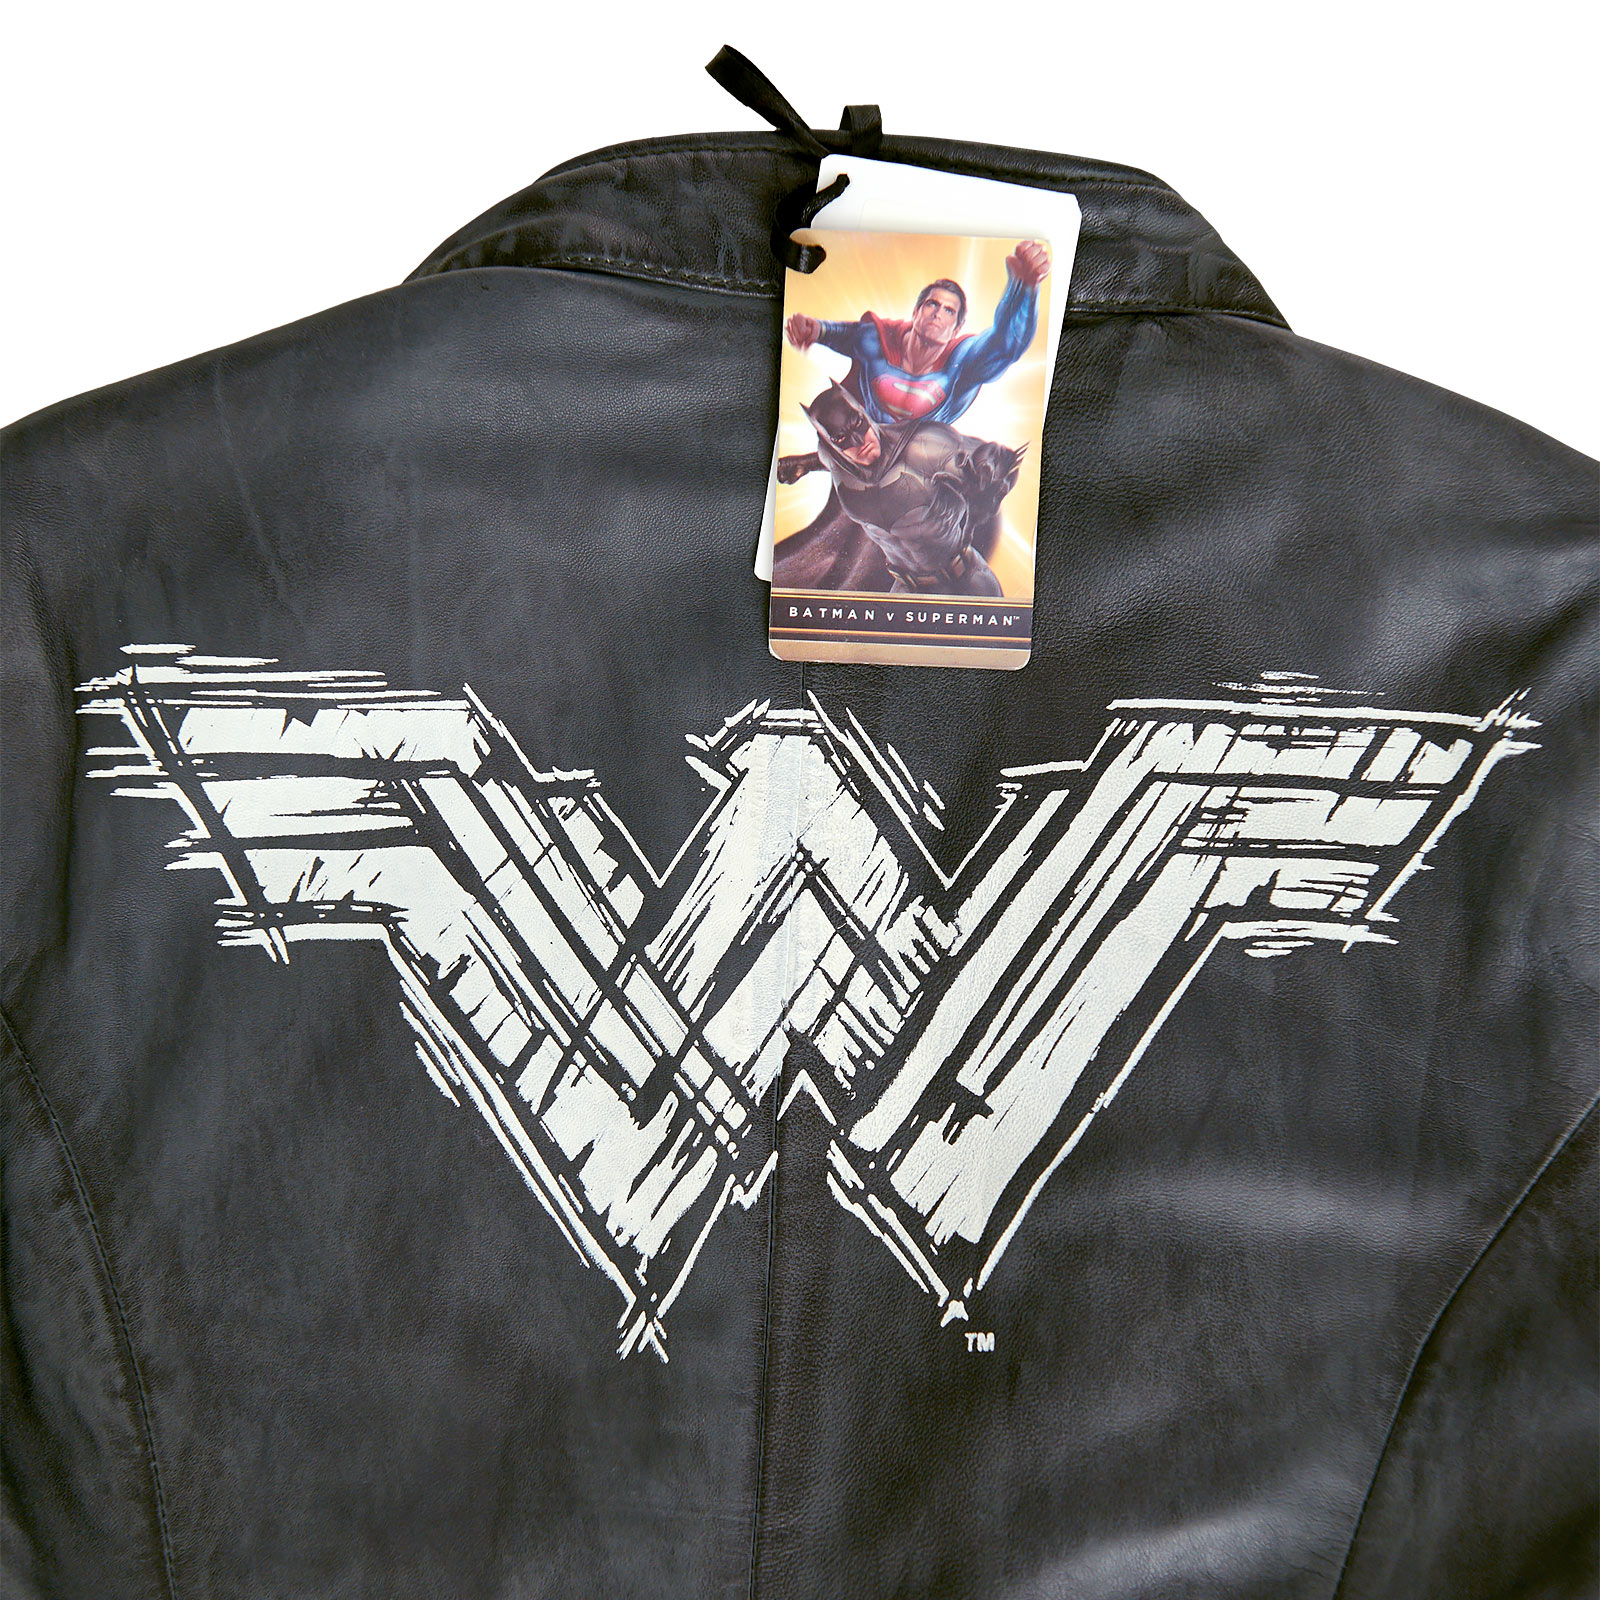 Wonder Woman - Logo Leather Jacket Grey